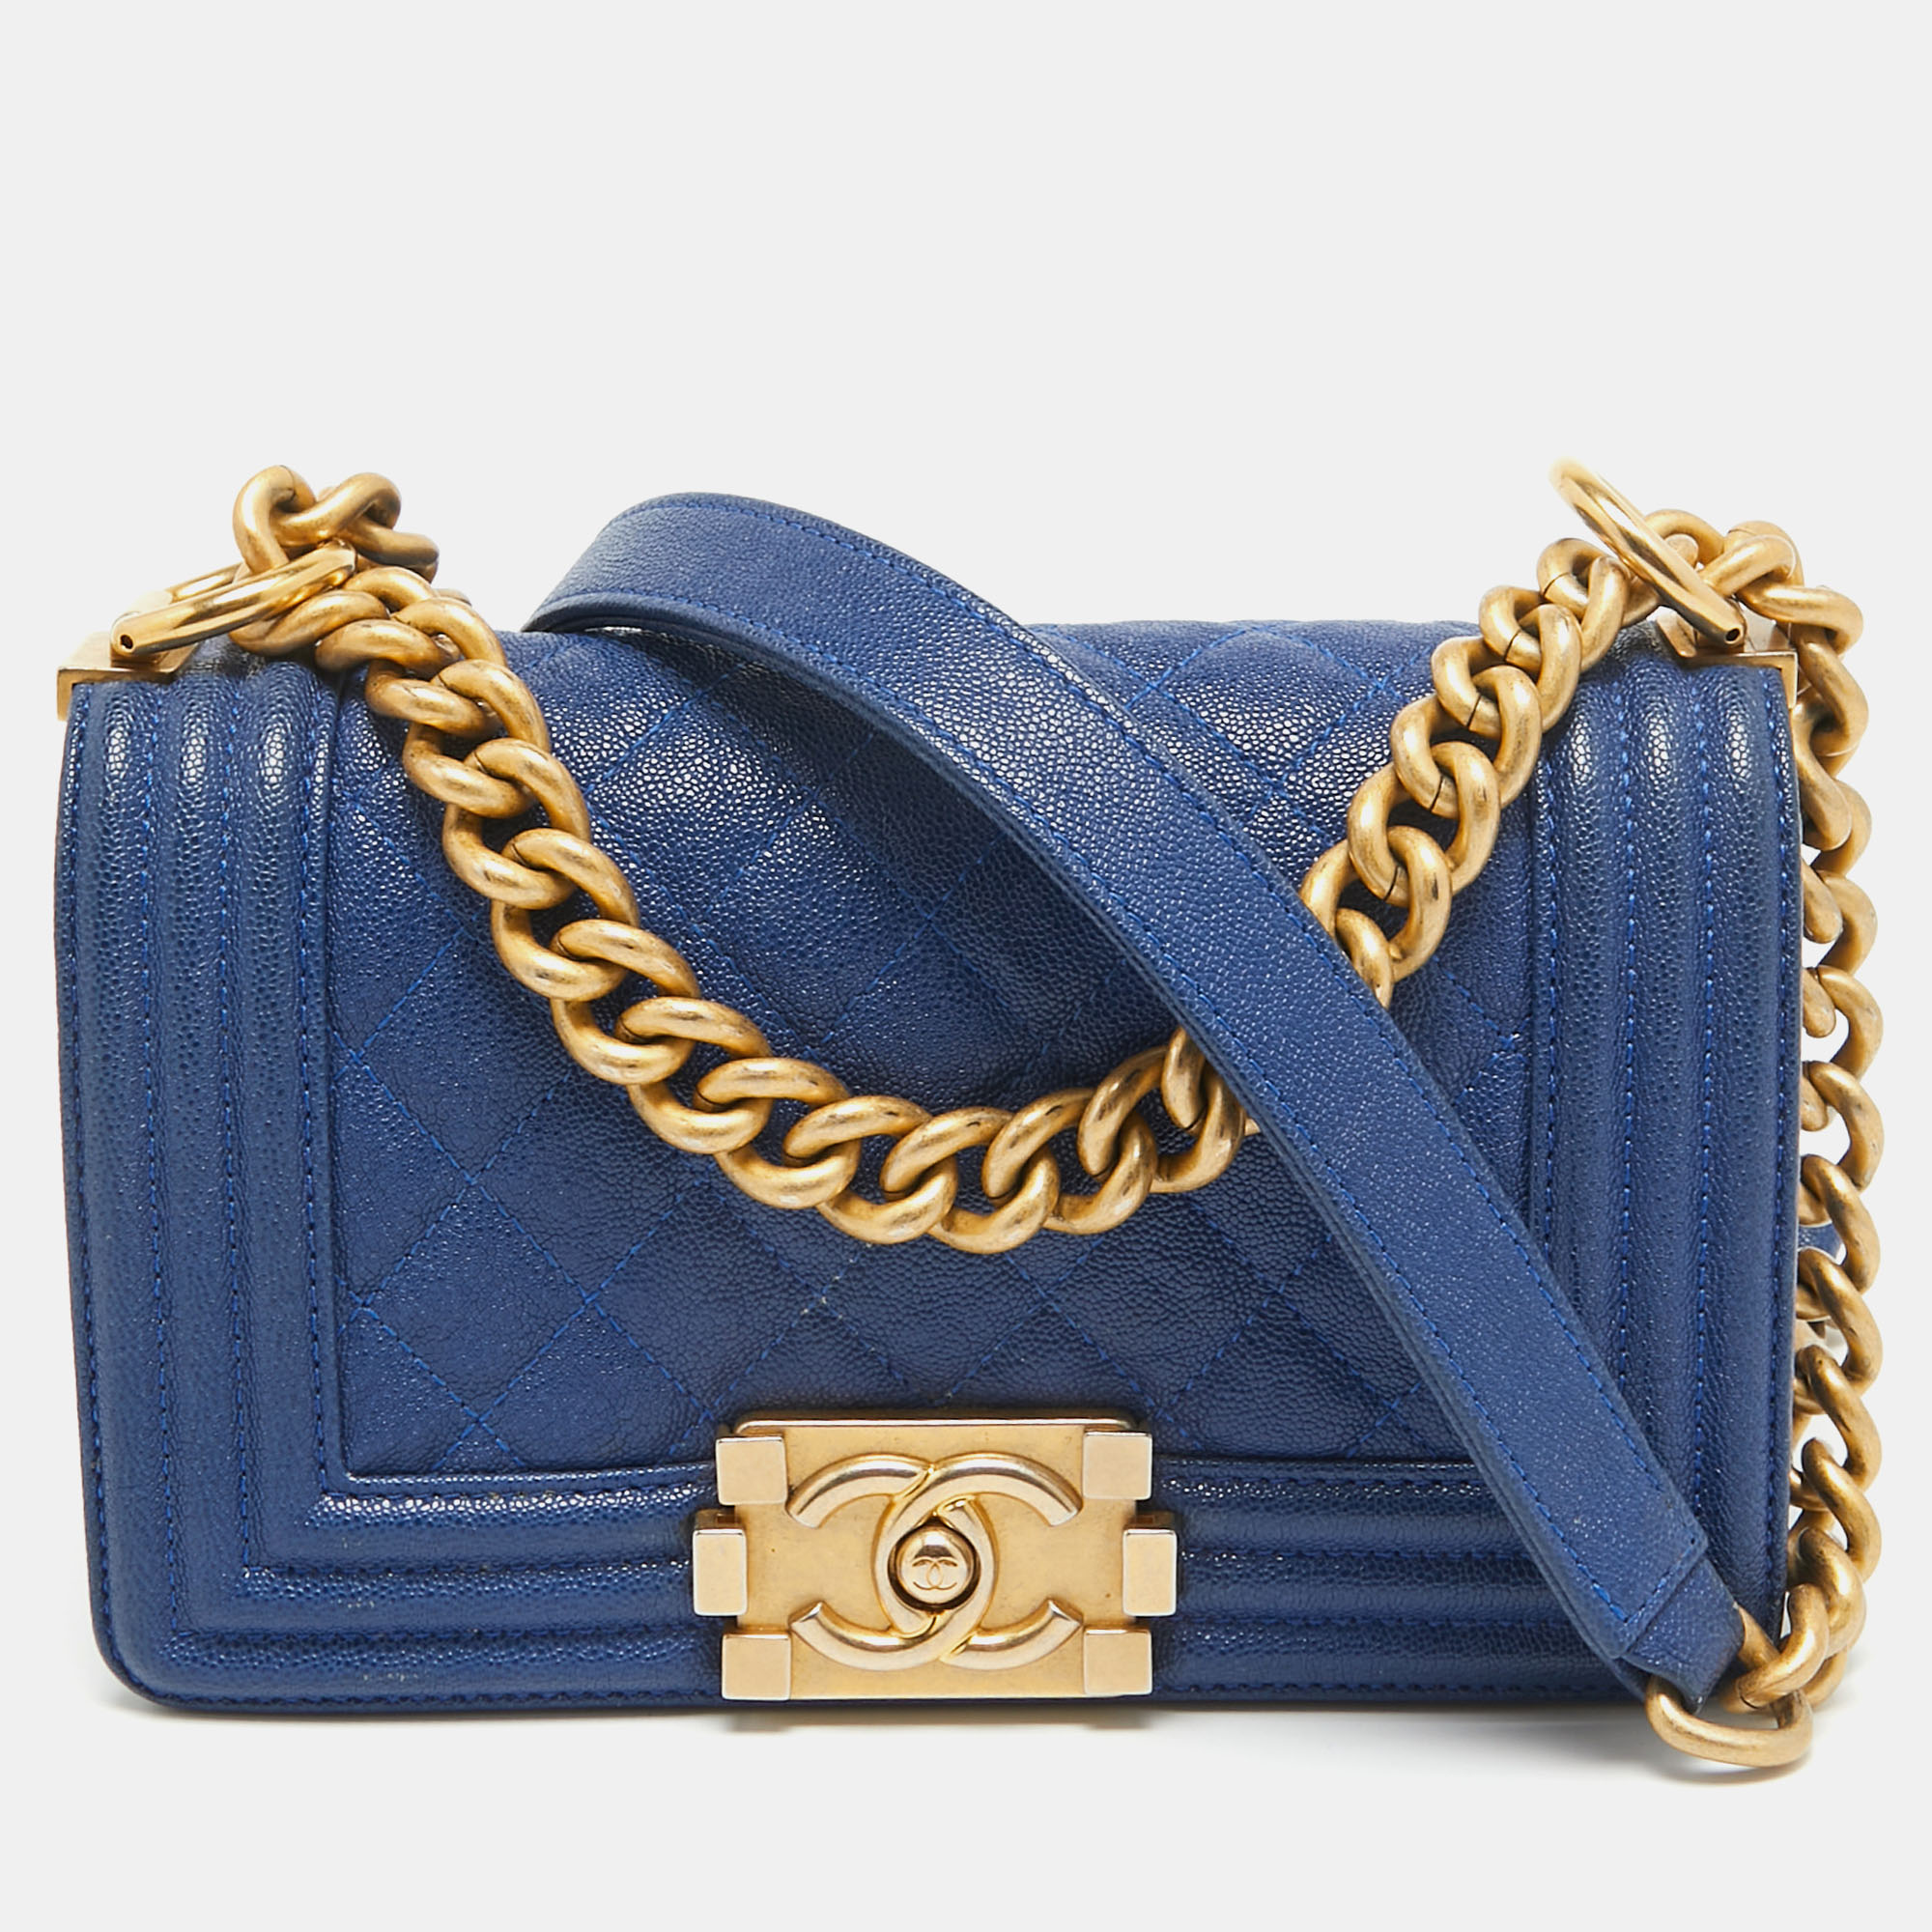 Chanel navy blue leather mini boy bag